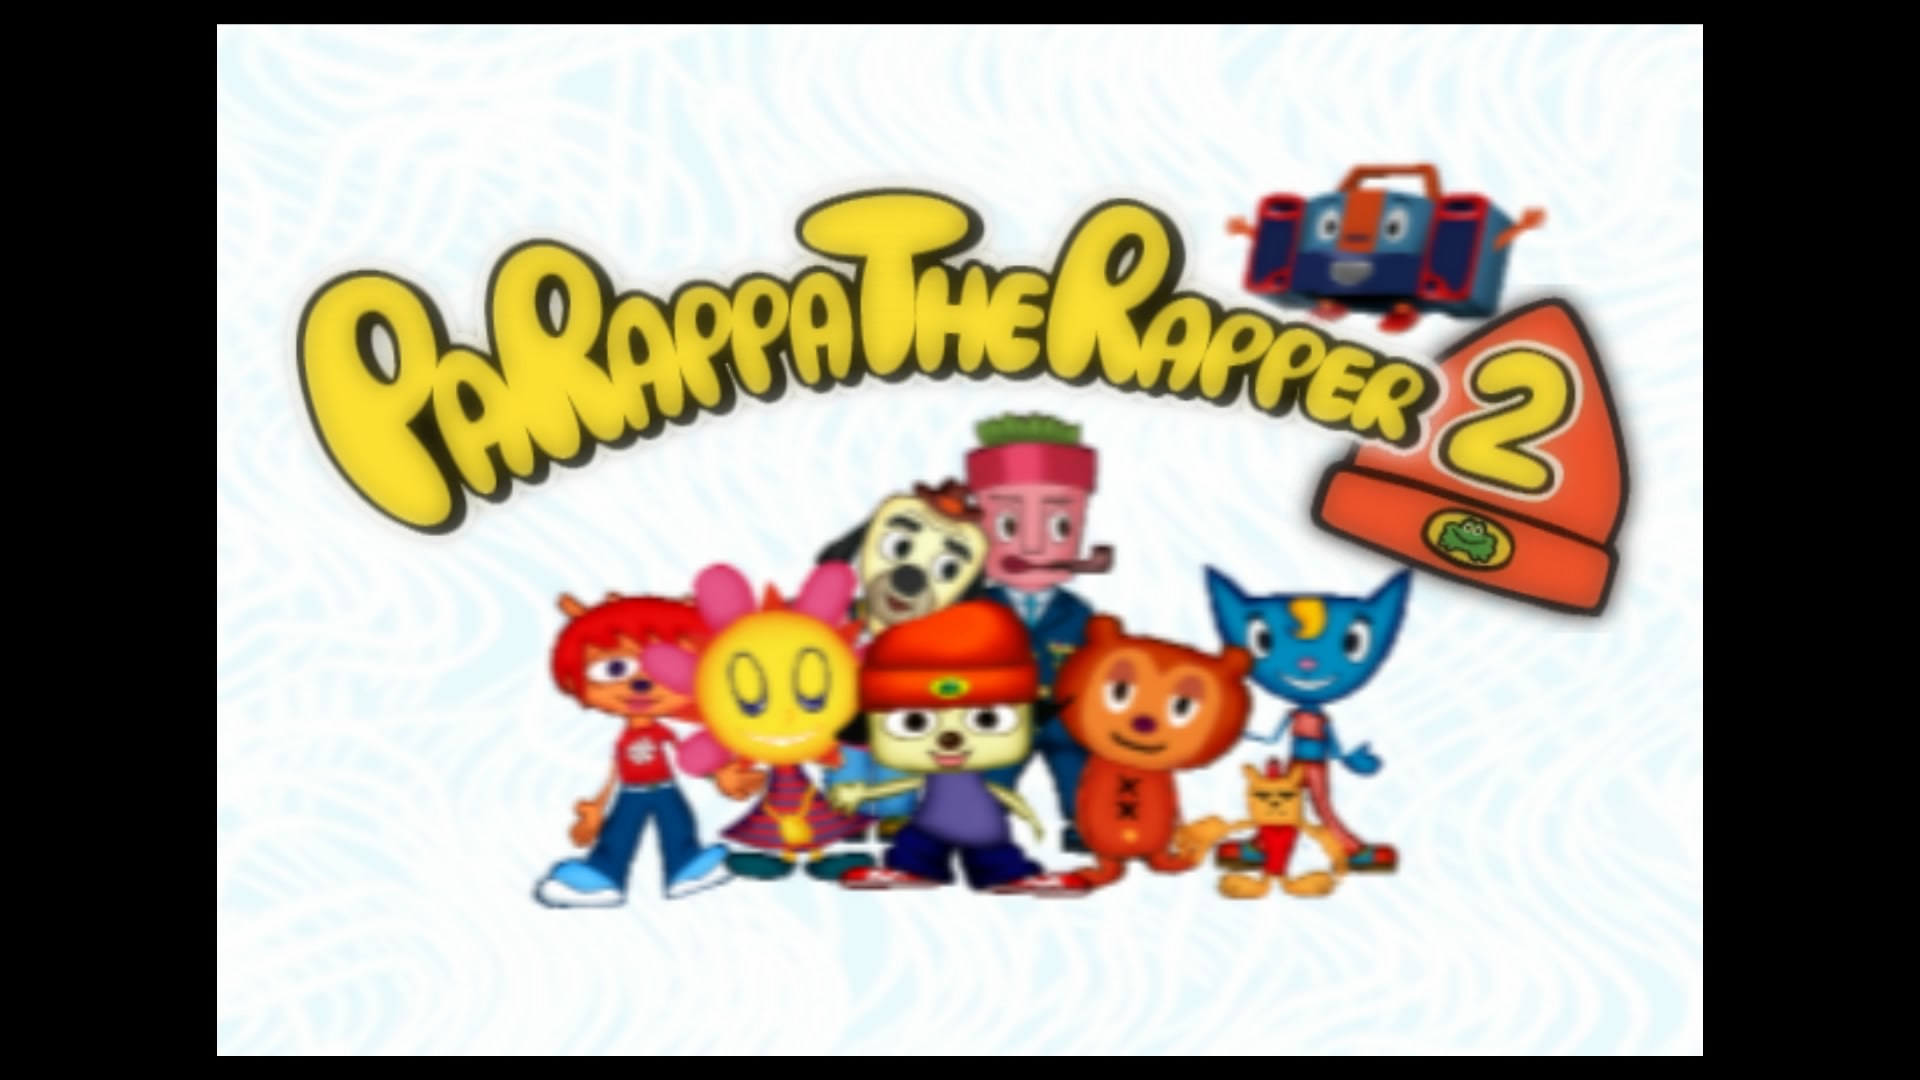 PARAPPA THE RAPPER REMASTERED PS4 PSN MÍDIA DIGITAL - LS Games